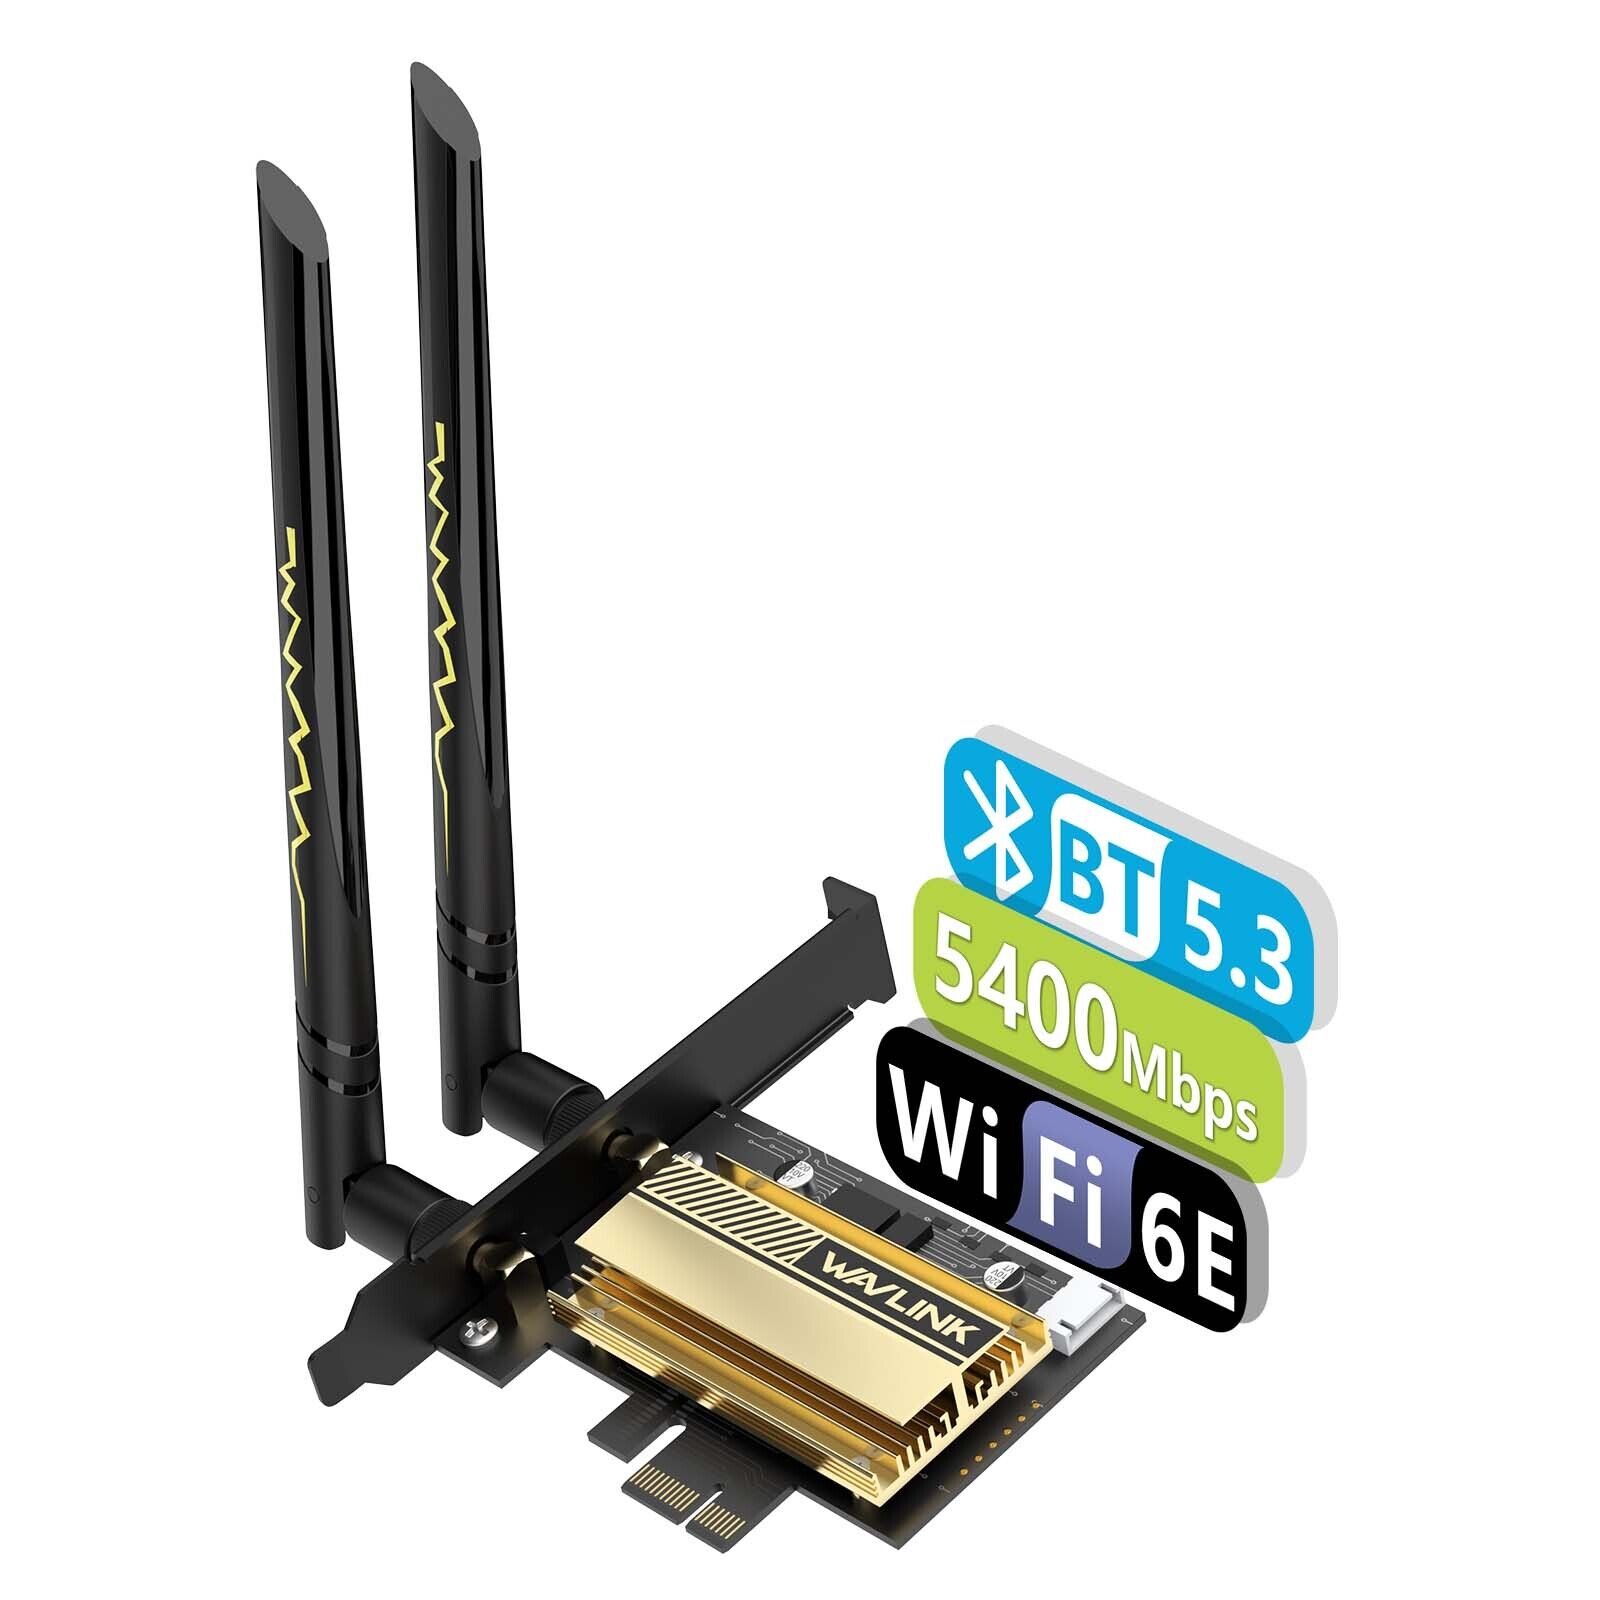 AX5400M WiFi 6E PCIe Network Card Tri-Band AX210 Wireless Adapter MU-MIMO WPA3